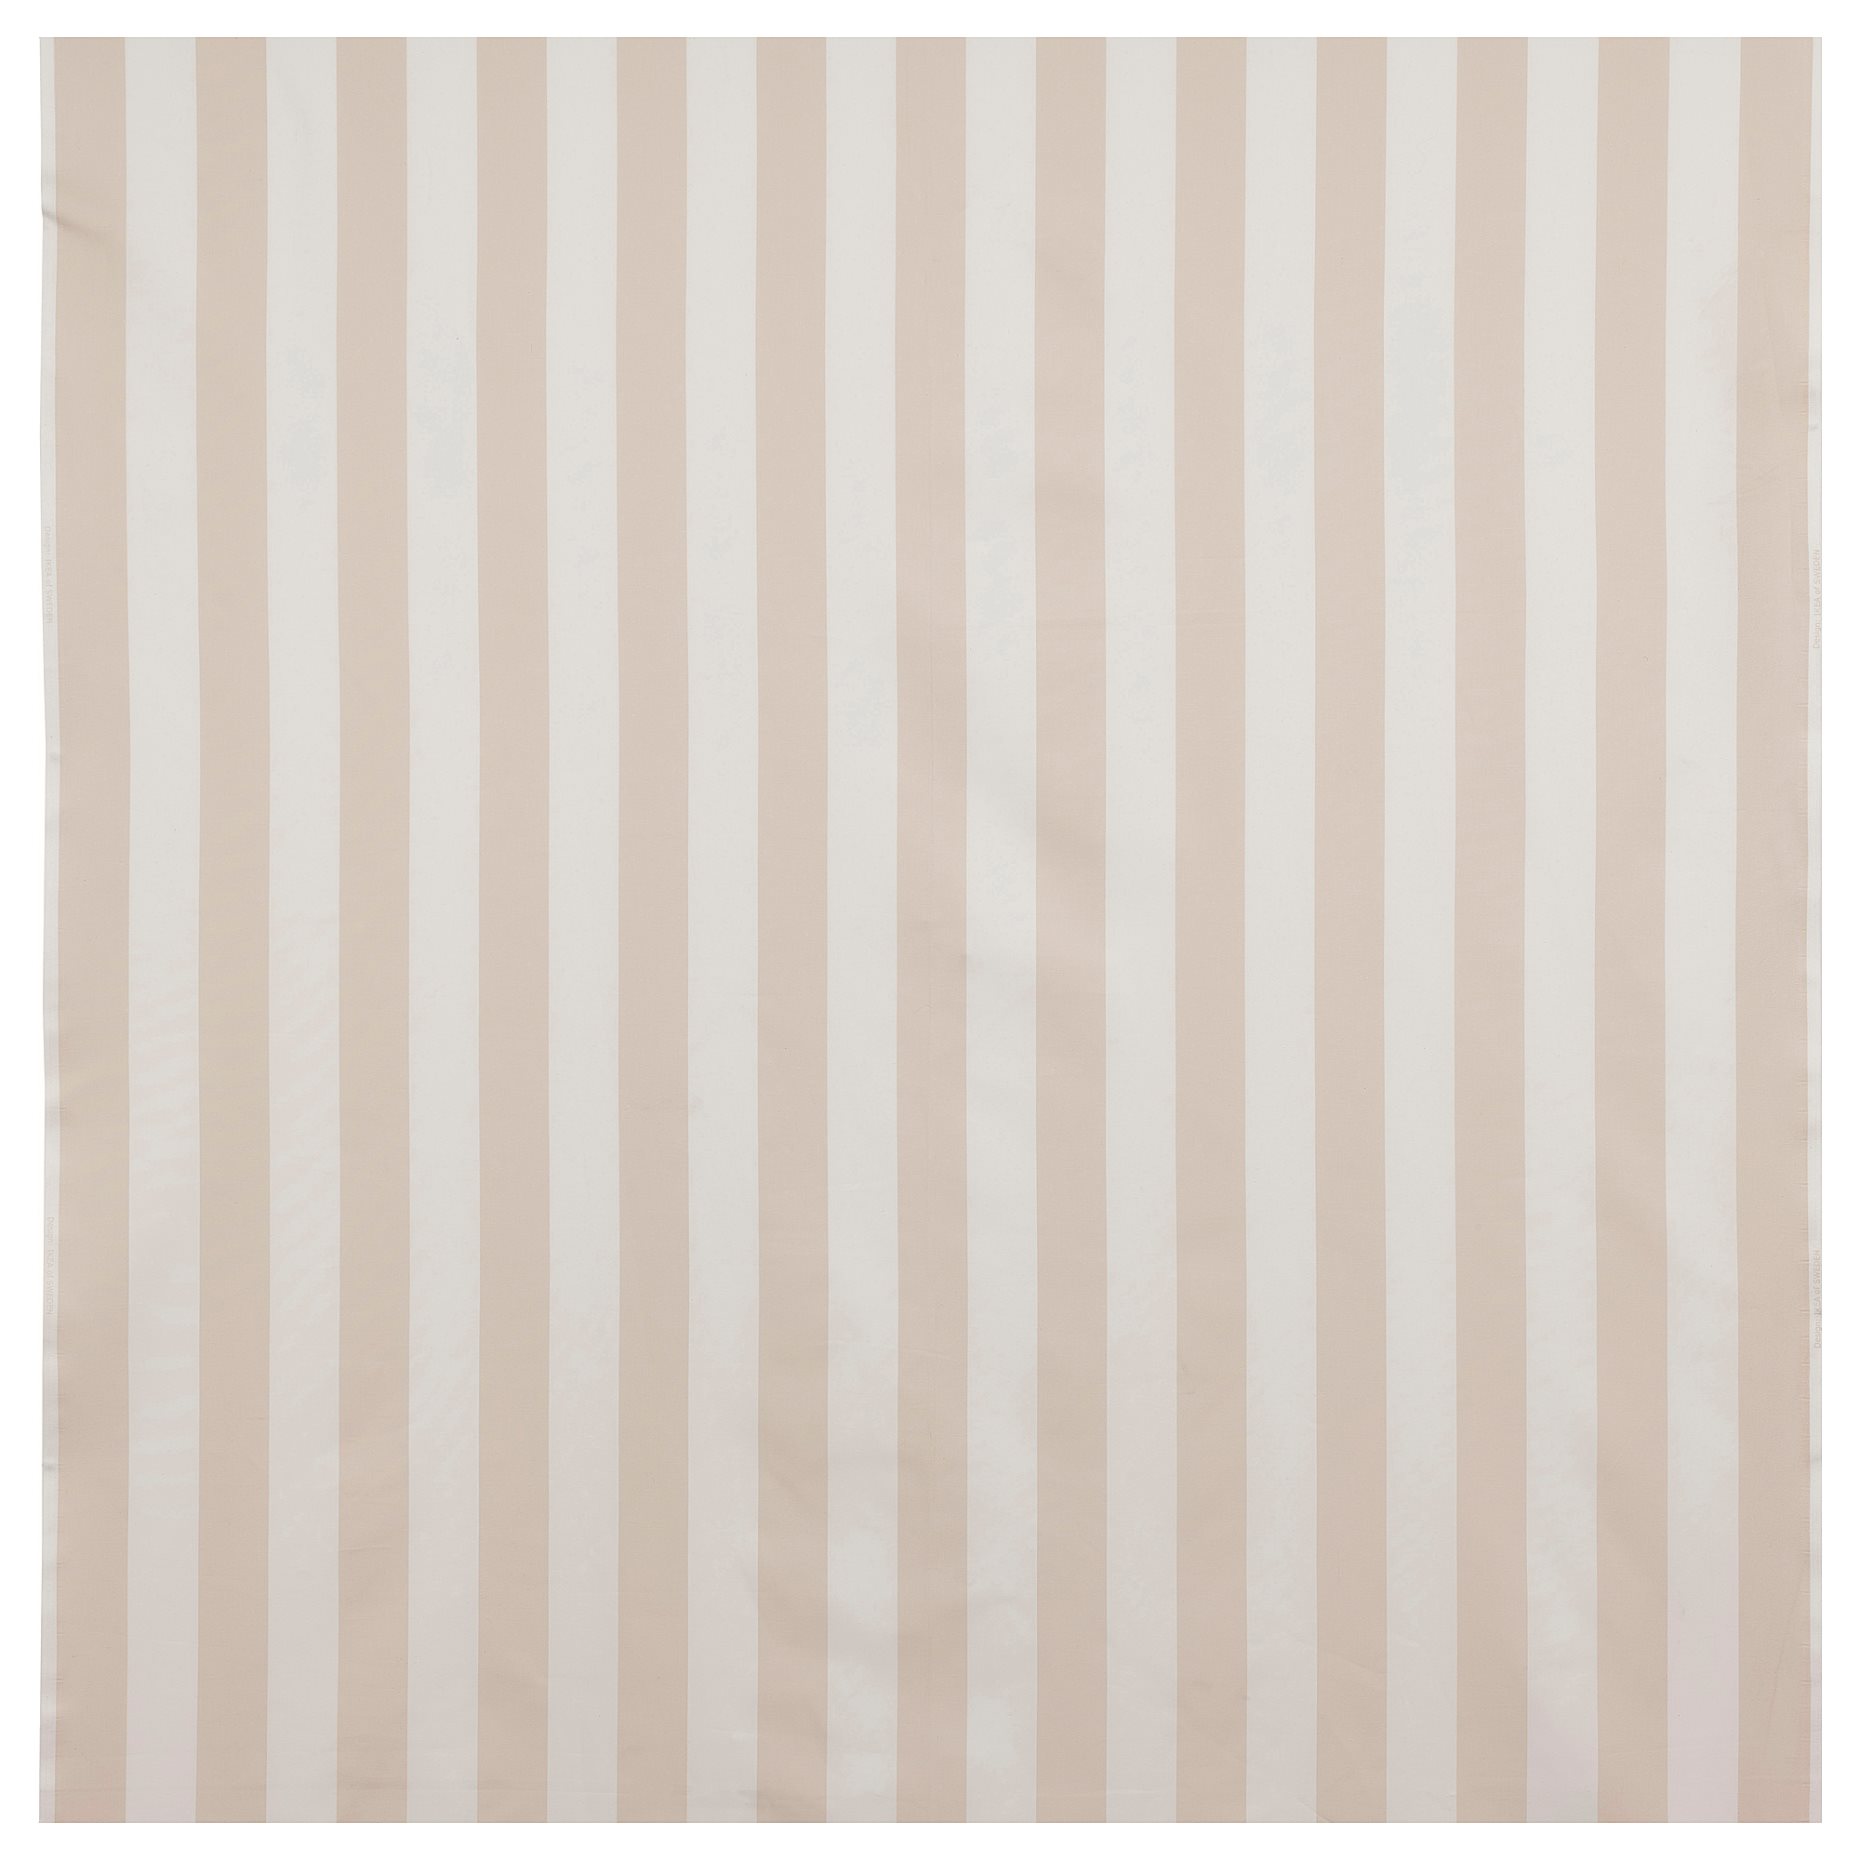 SOFIA, fabric broad-striped, 150 cm, 504.927.26